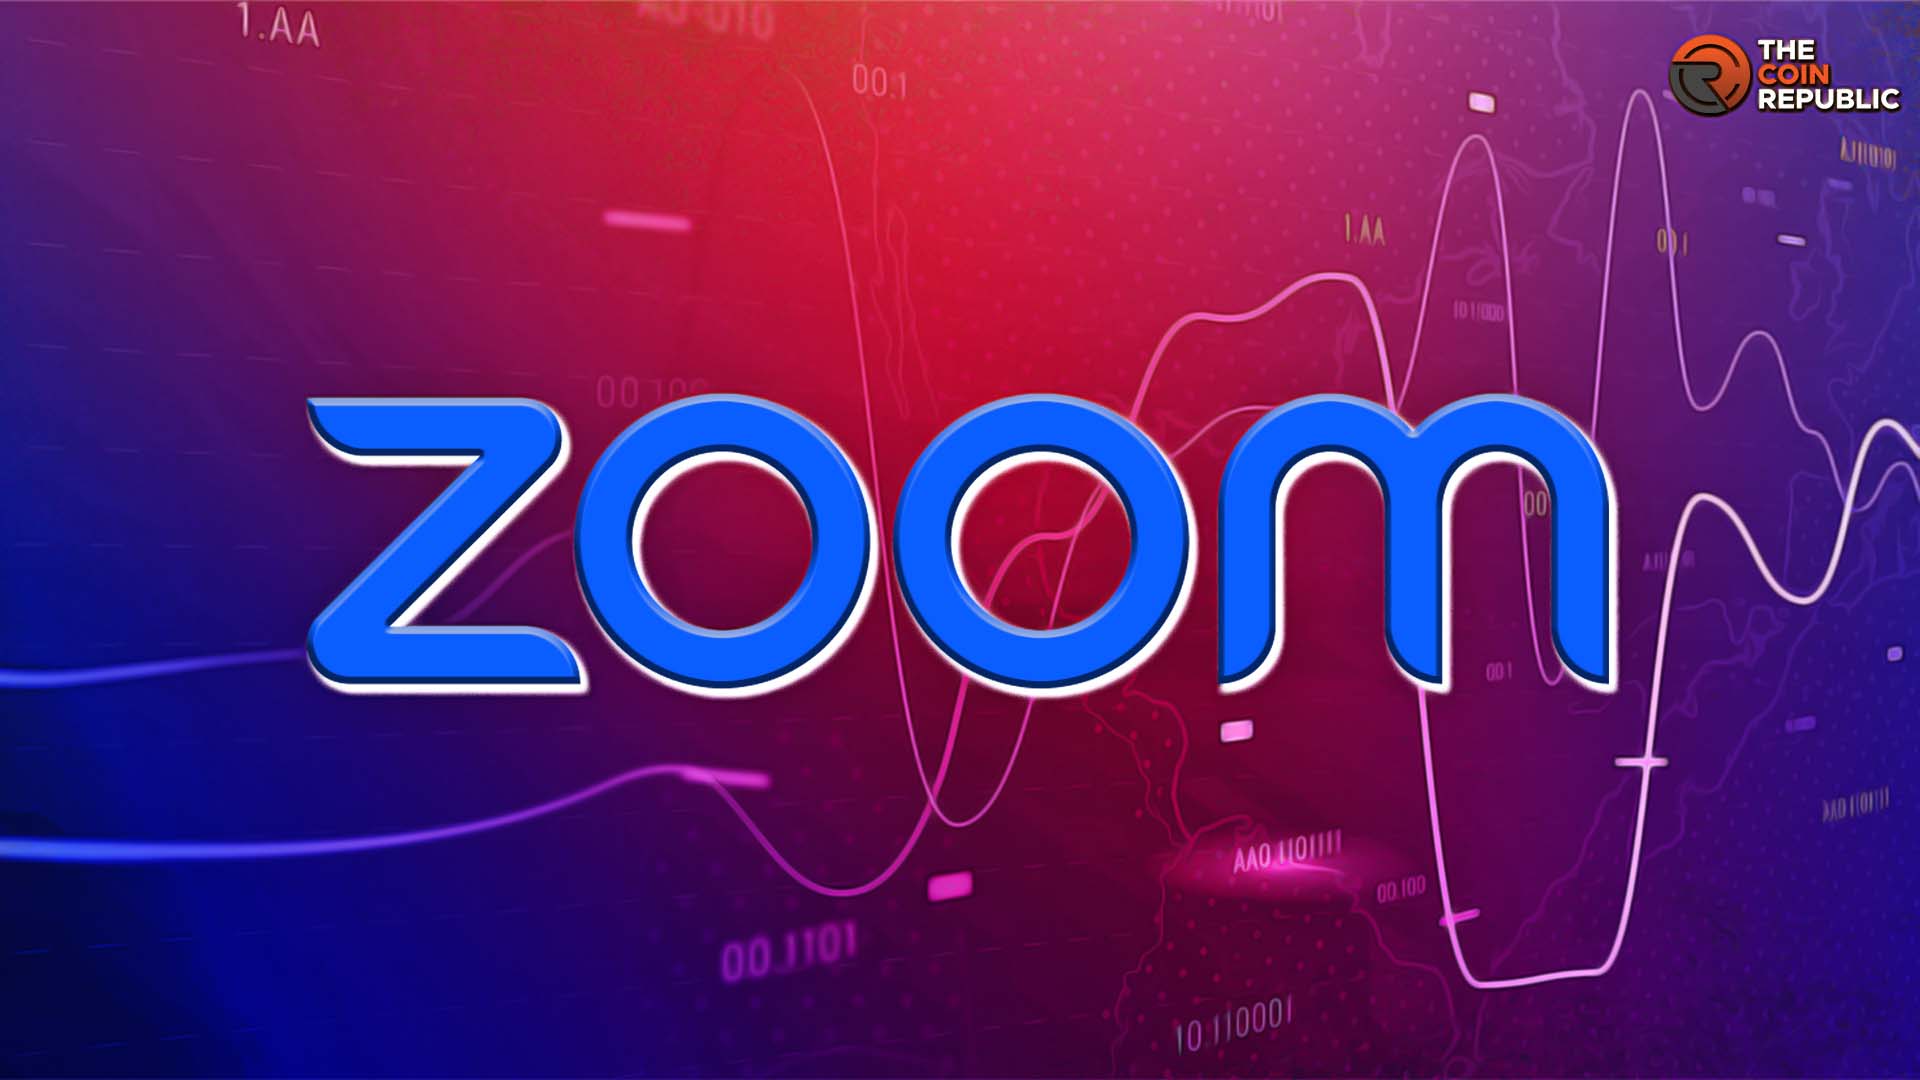 Zoom Stock (ZM): Will ZM Stock Price Break $76 After Earnings?